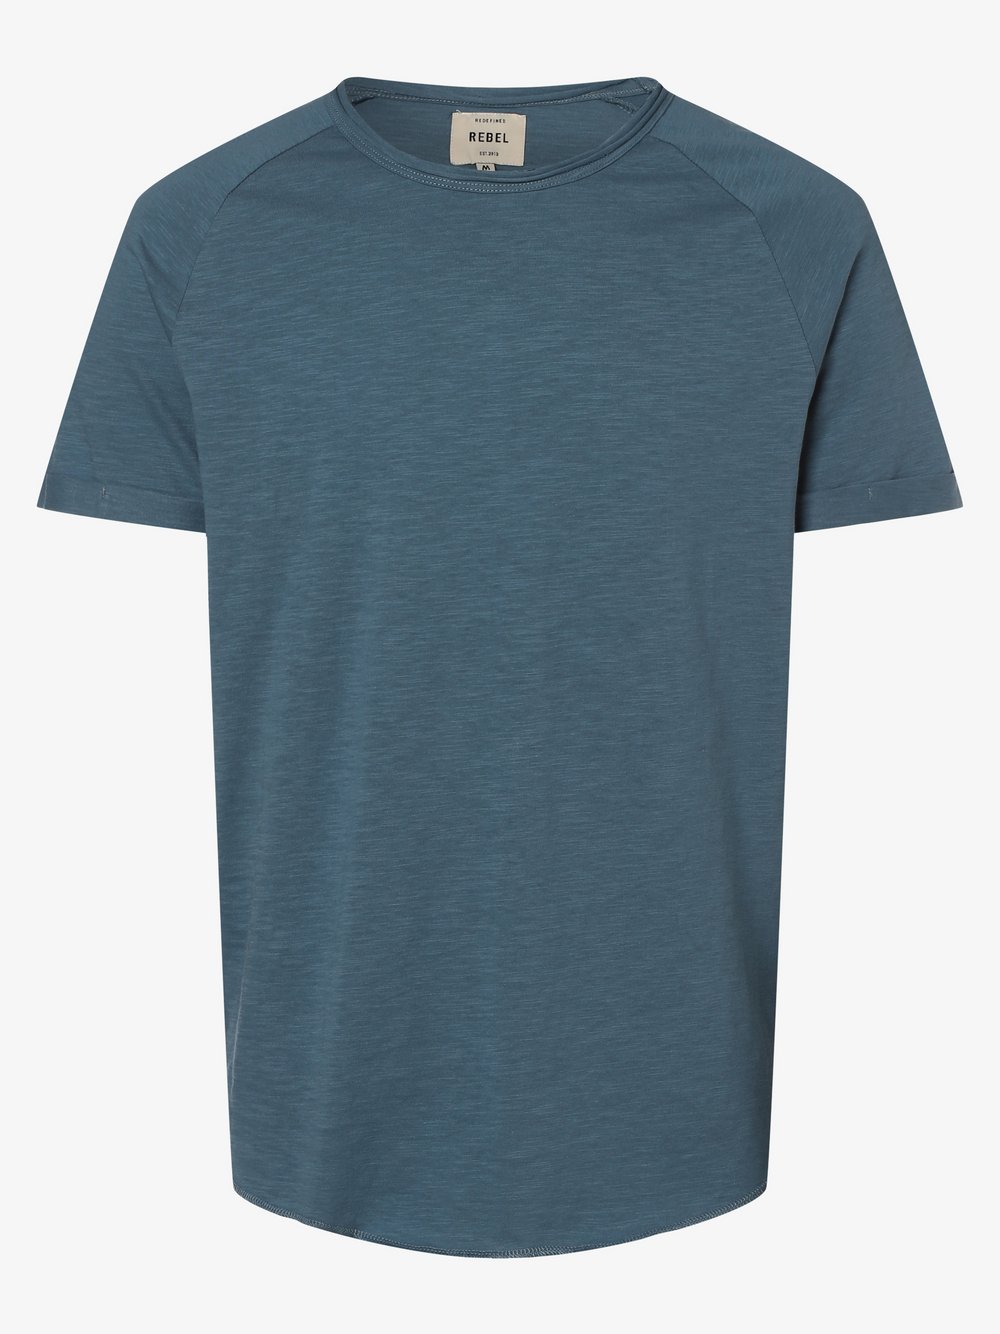 Redefined Rebel - T-shirt męski – Kas, niebieski